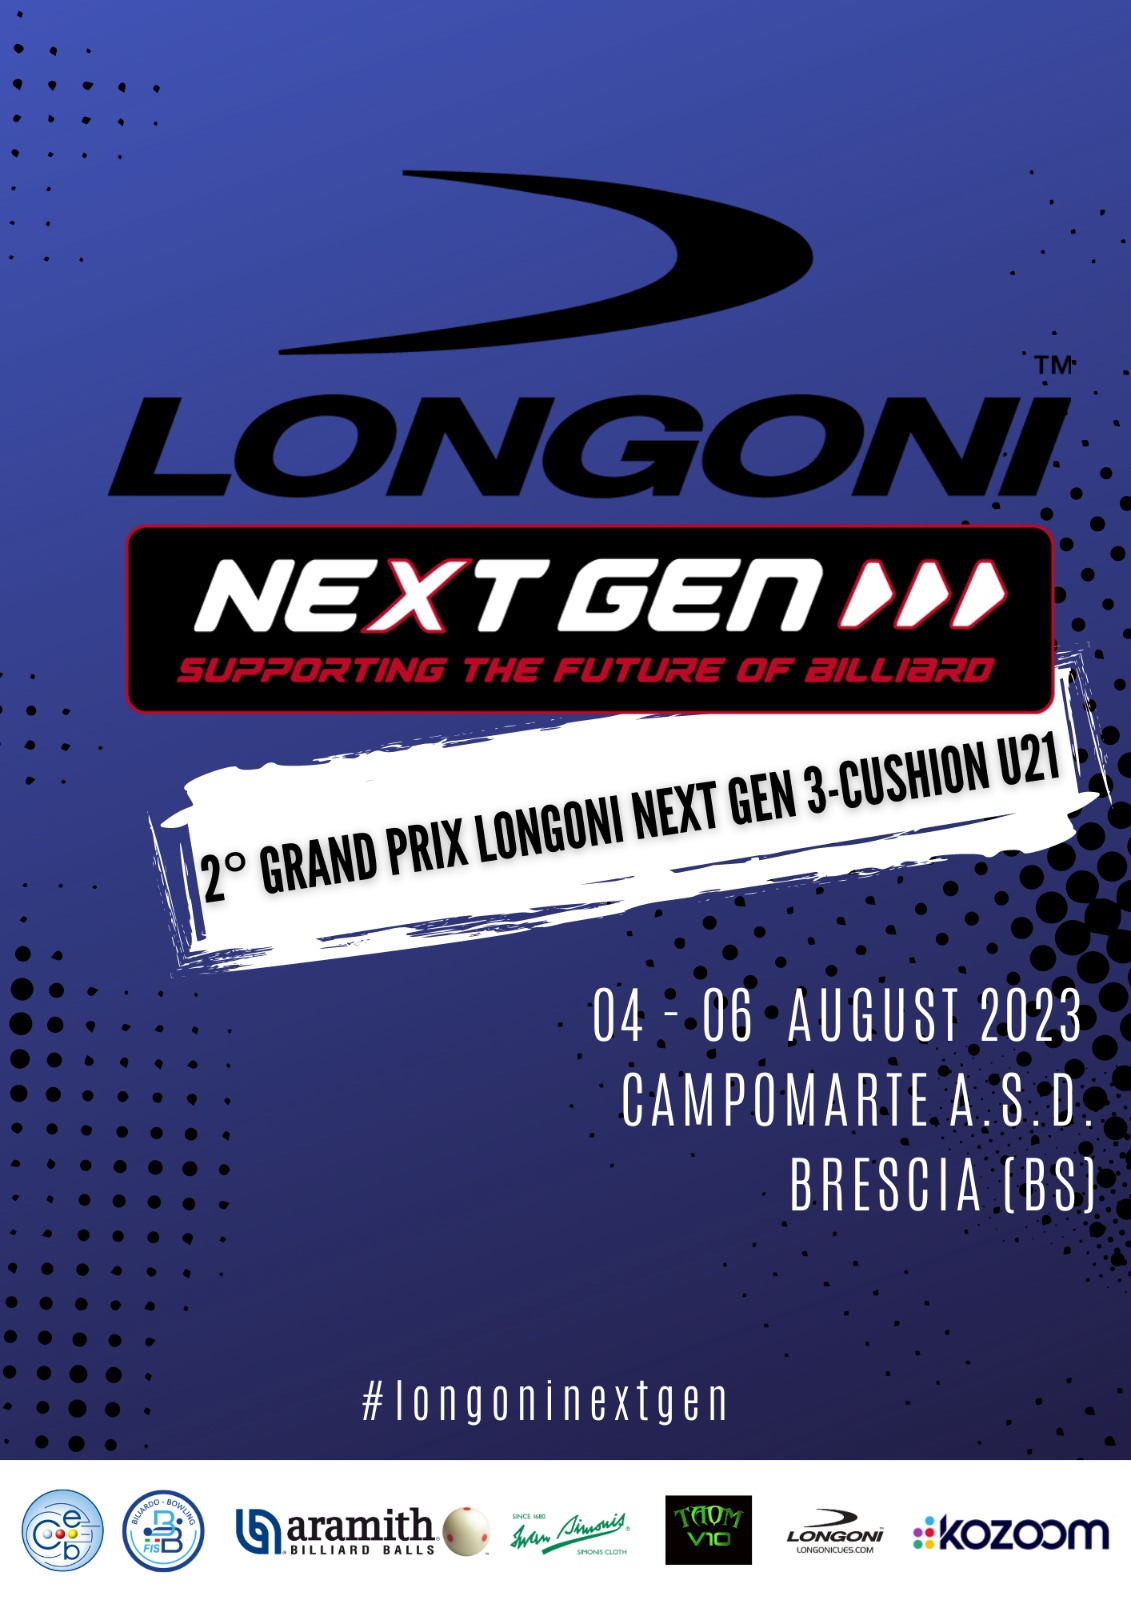 2° GRAND PRIX LONGONI NEXT GEN 3-CUSHION UNDER 21